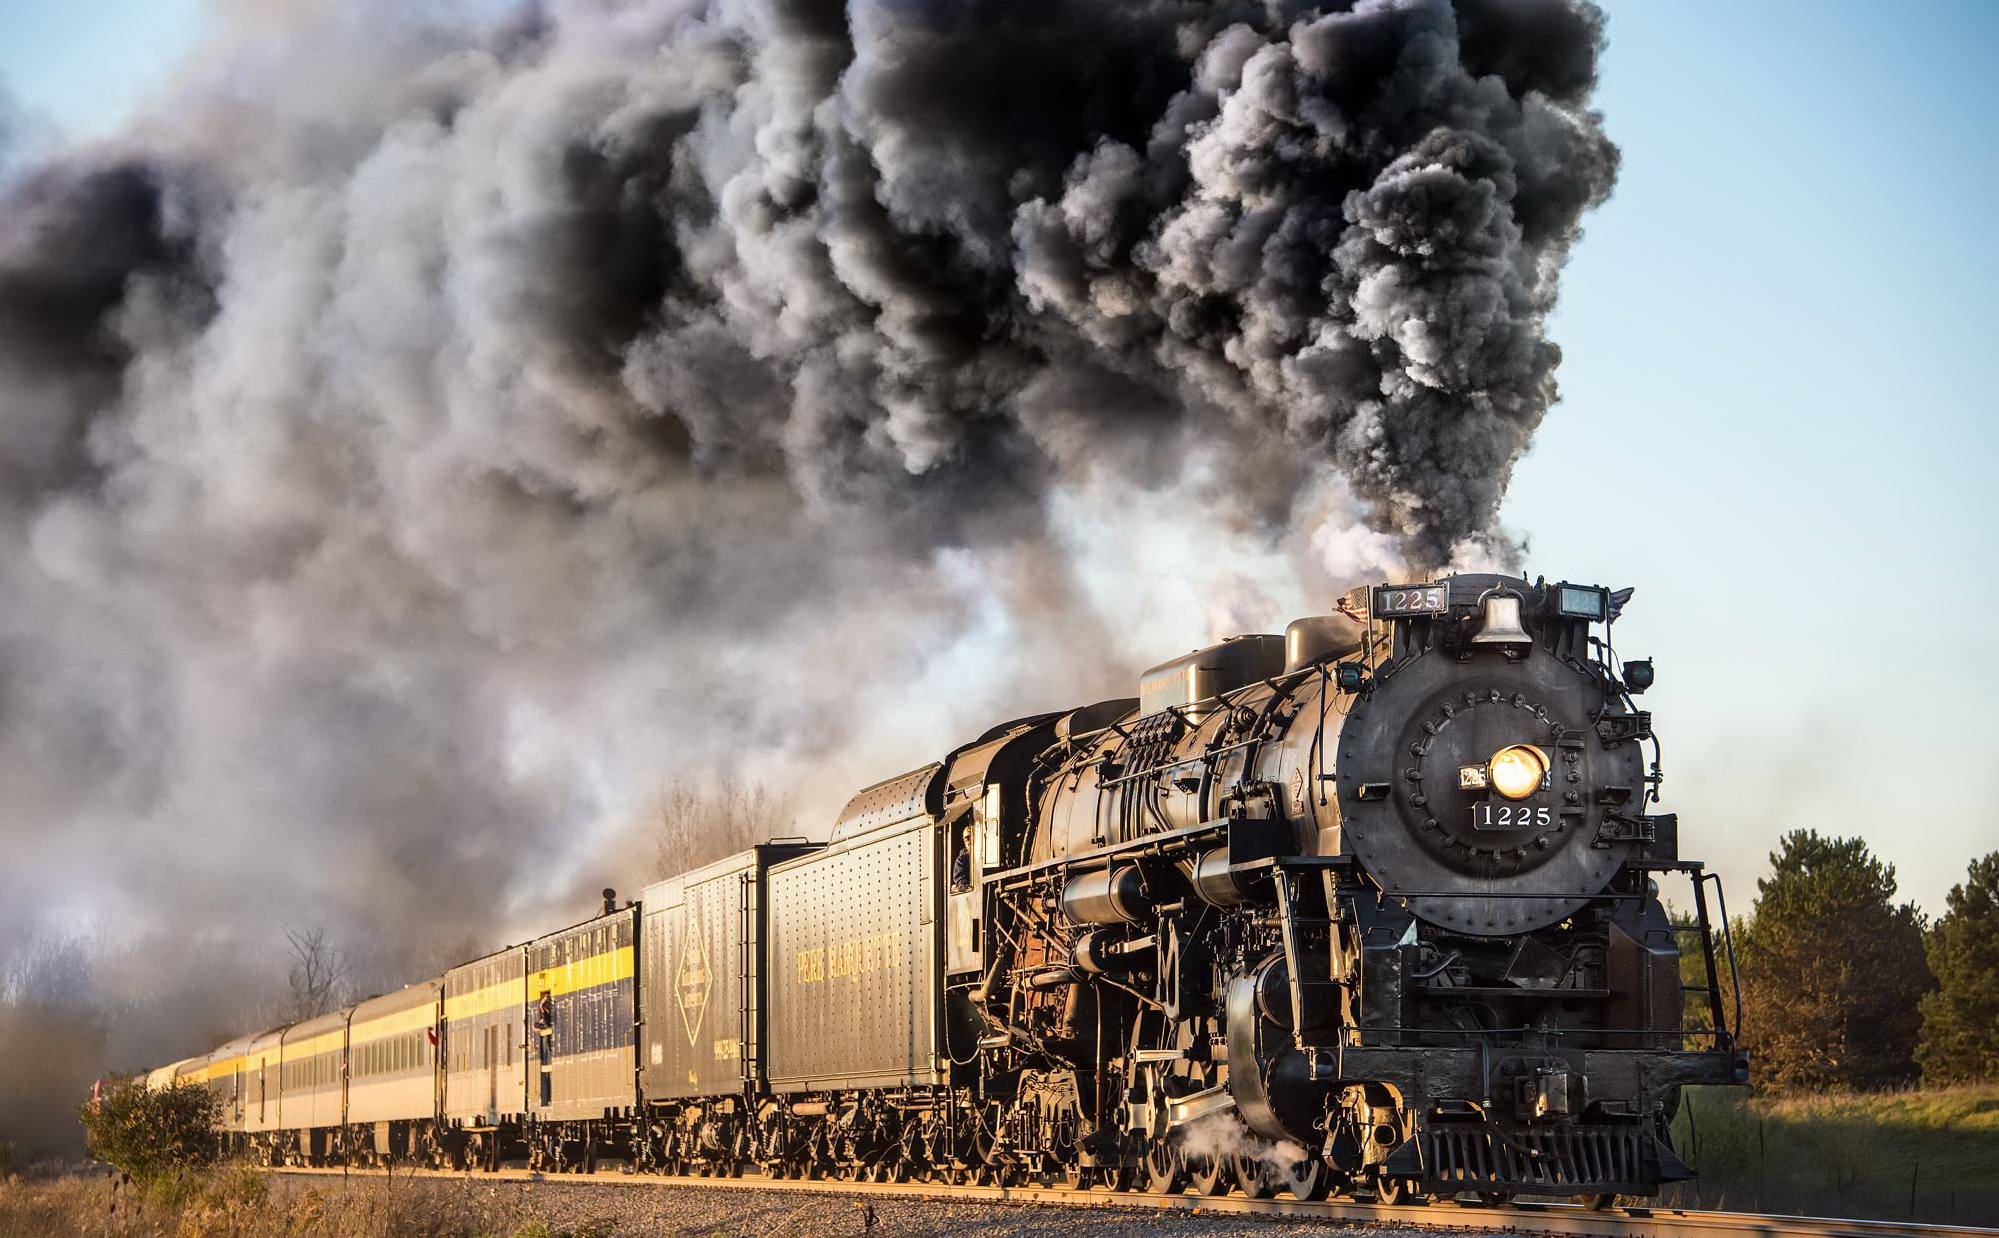 train, vehicles, locomotive, smoke, steam train